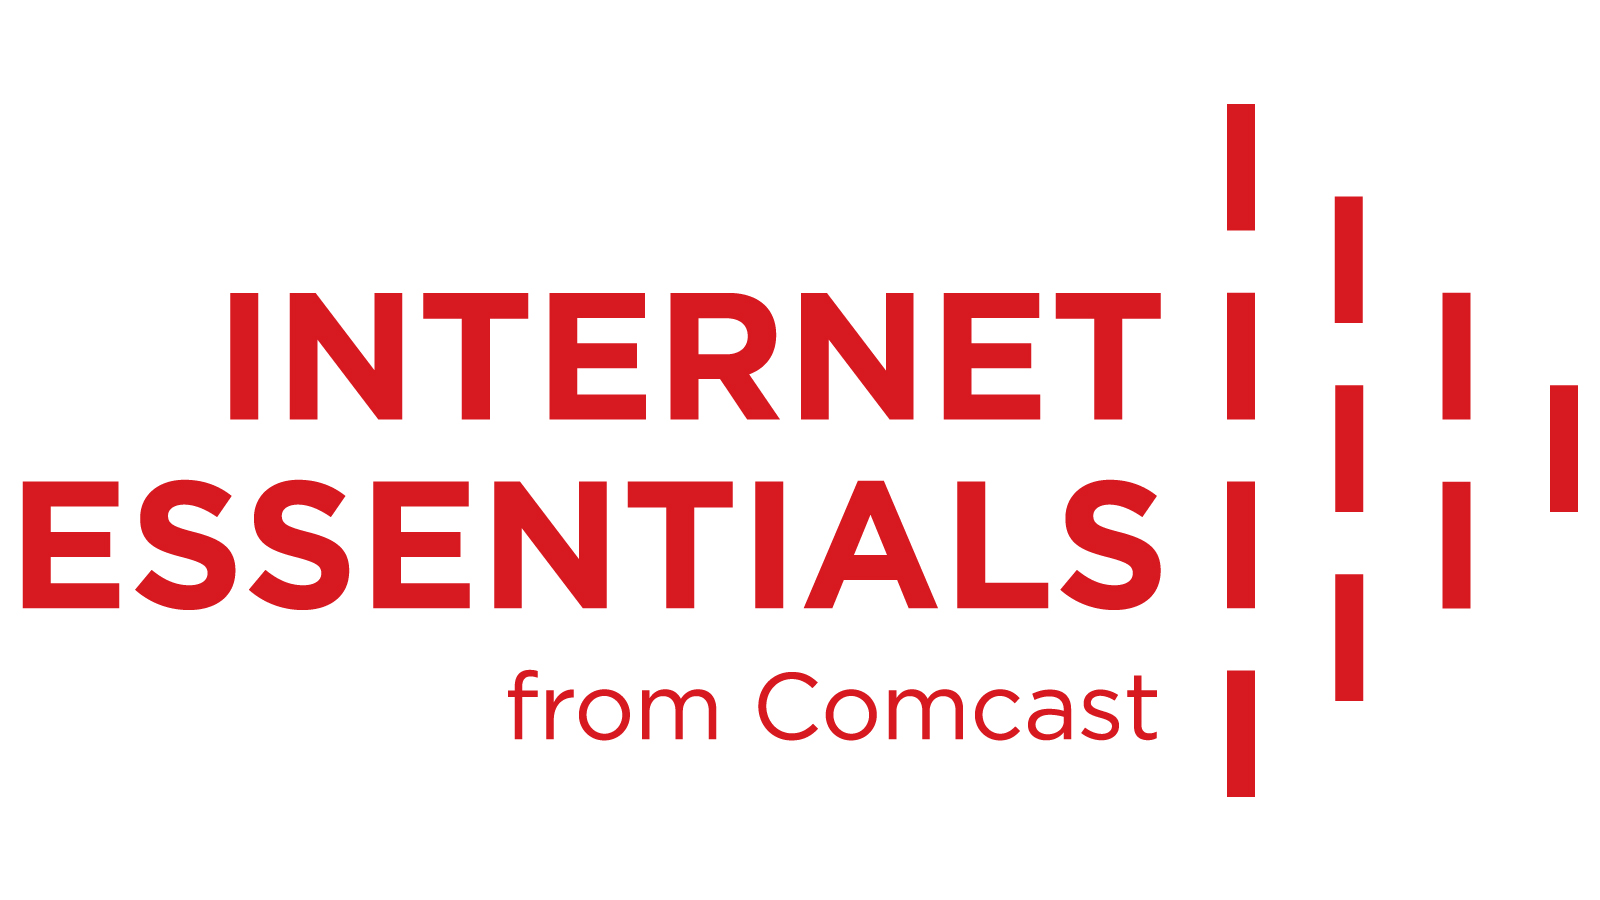 The Internet Essentials logo.